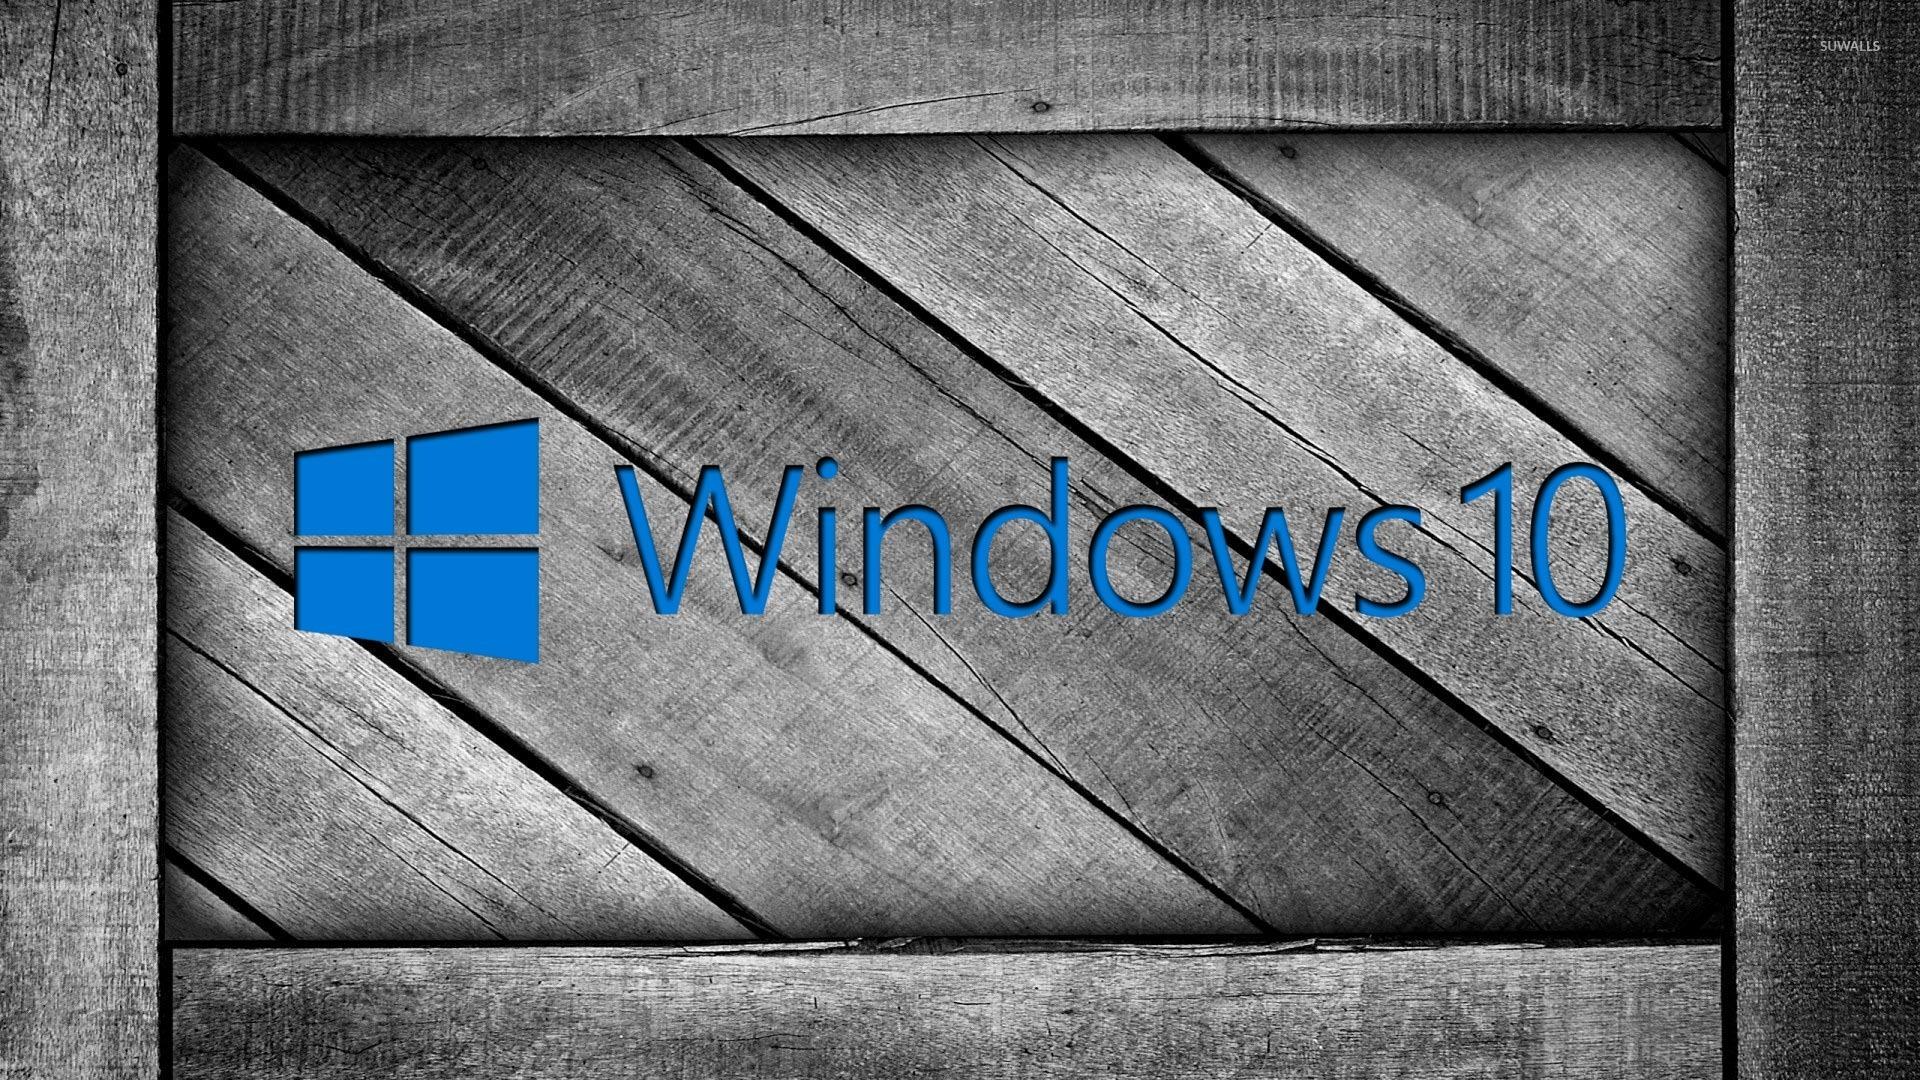 1920 x 1080 · jpeg - Windows 10 on a gray wooden crate [2] wallpaper - Computer wallpapers ...